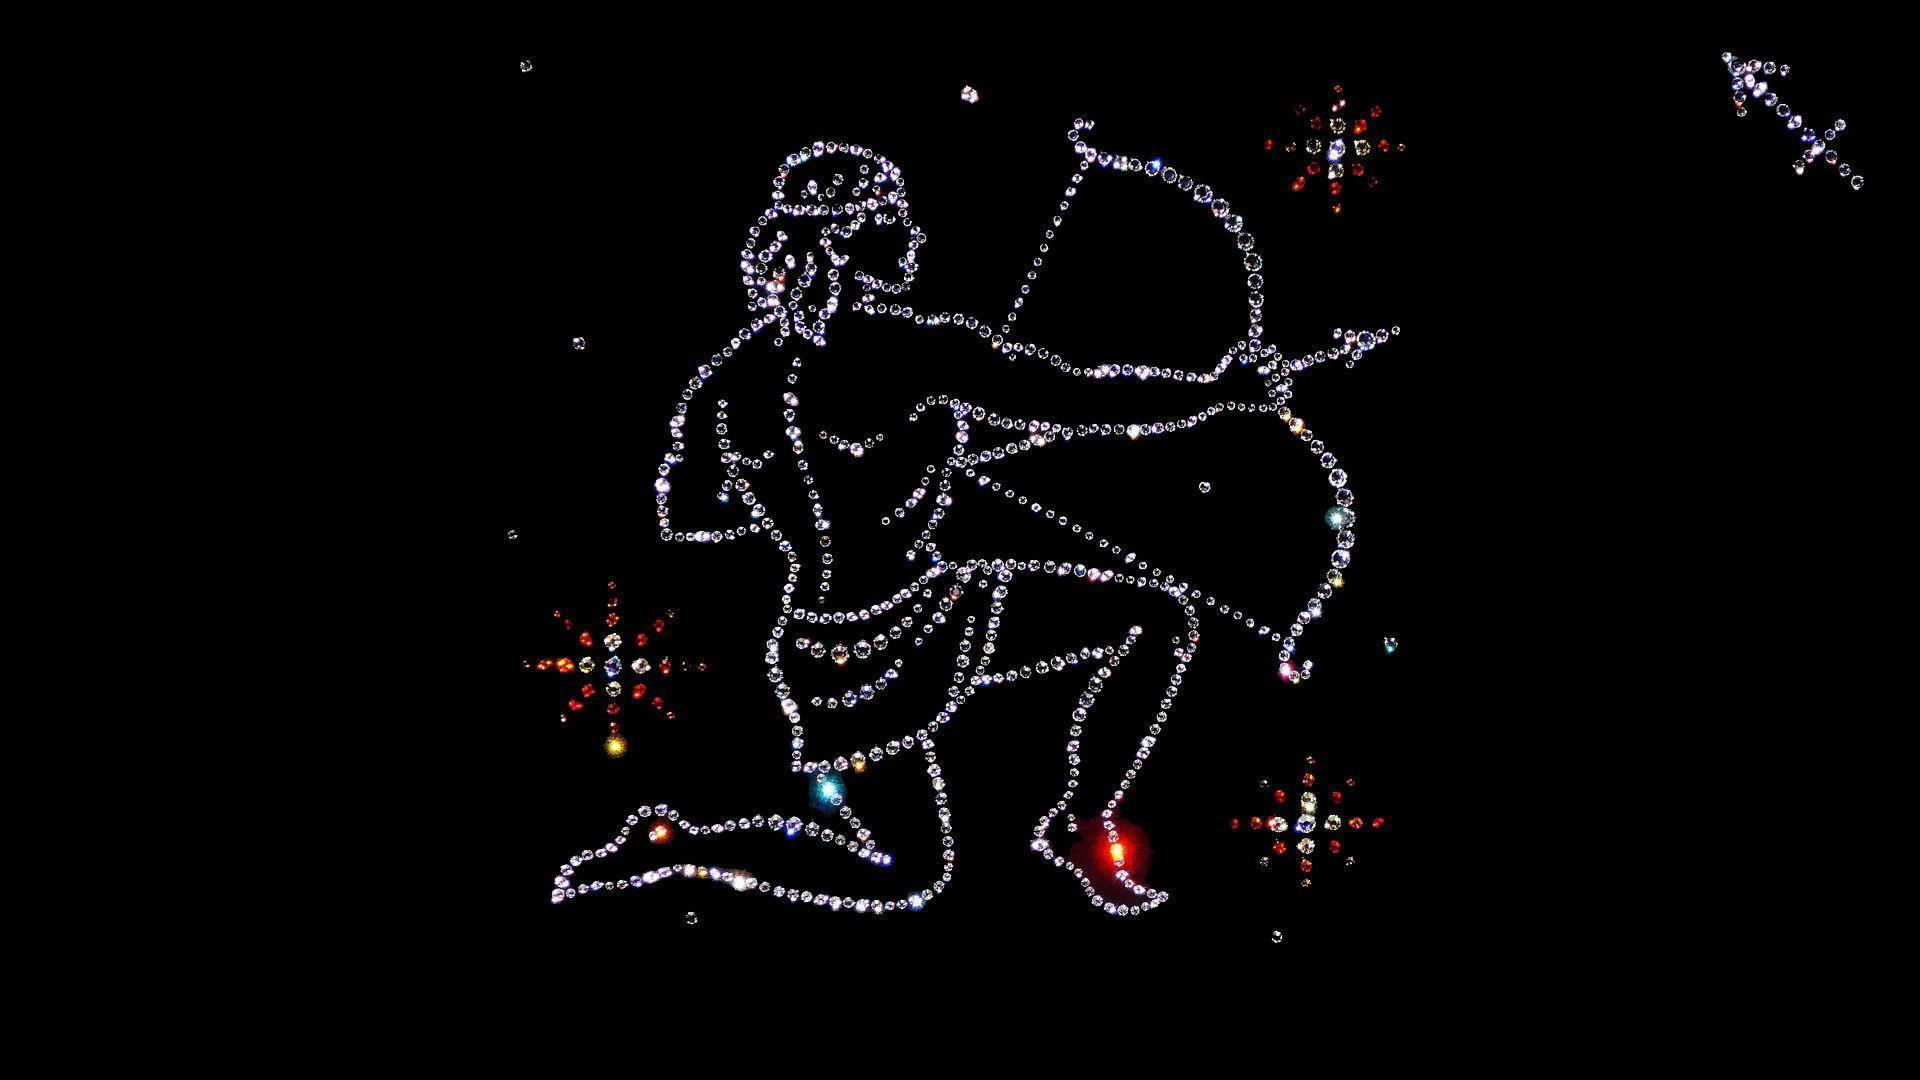 Sagittarius from precious stones wallpaper and image